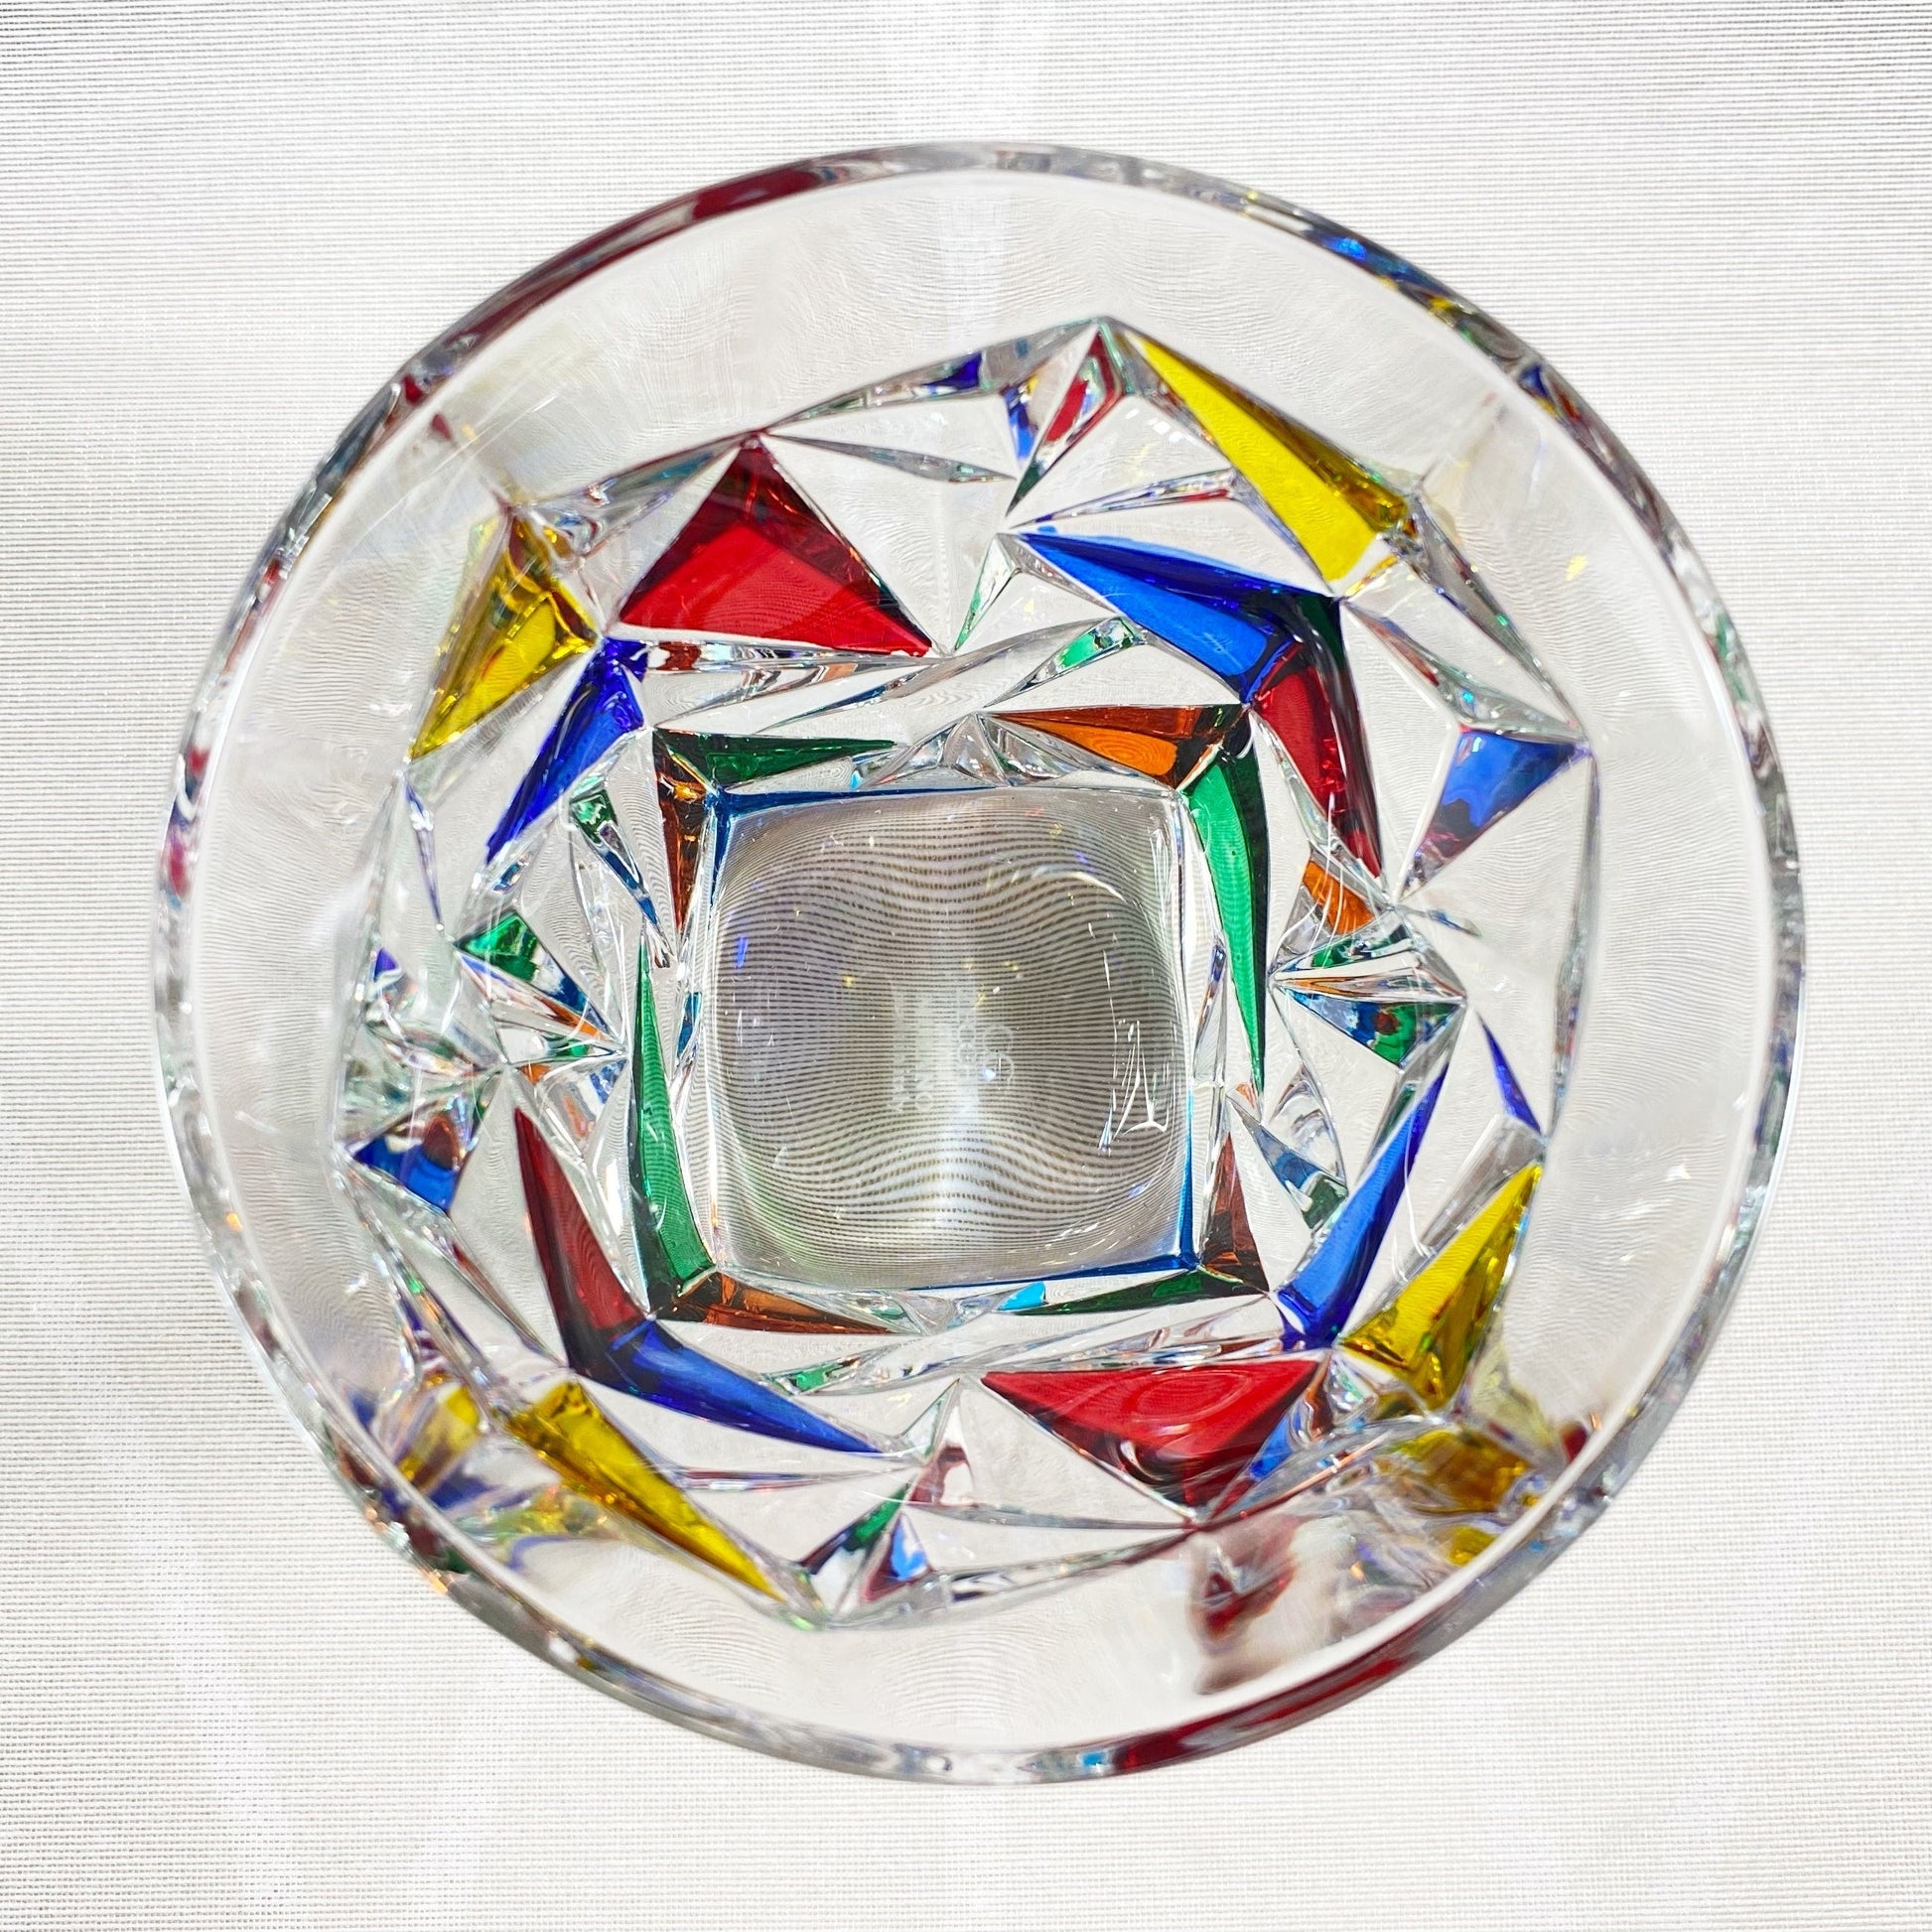 Glacier Whiskey Venetian Glass Tumbler - Handmade in Italy, Colorful Murano Glass